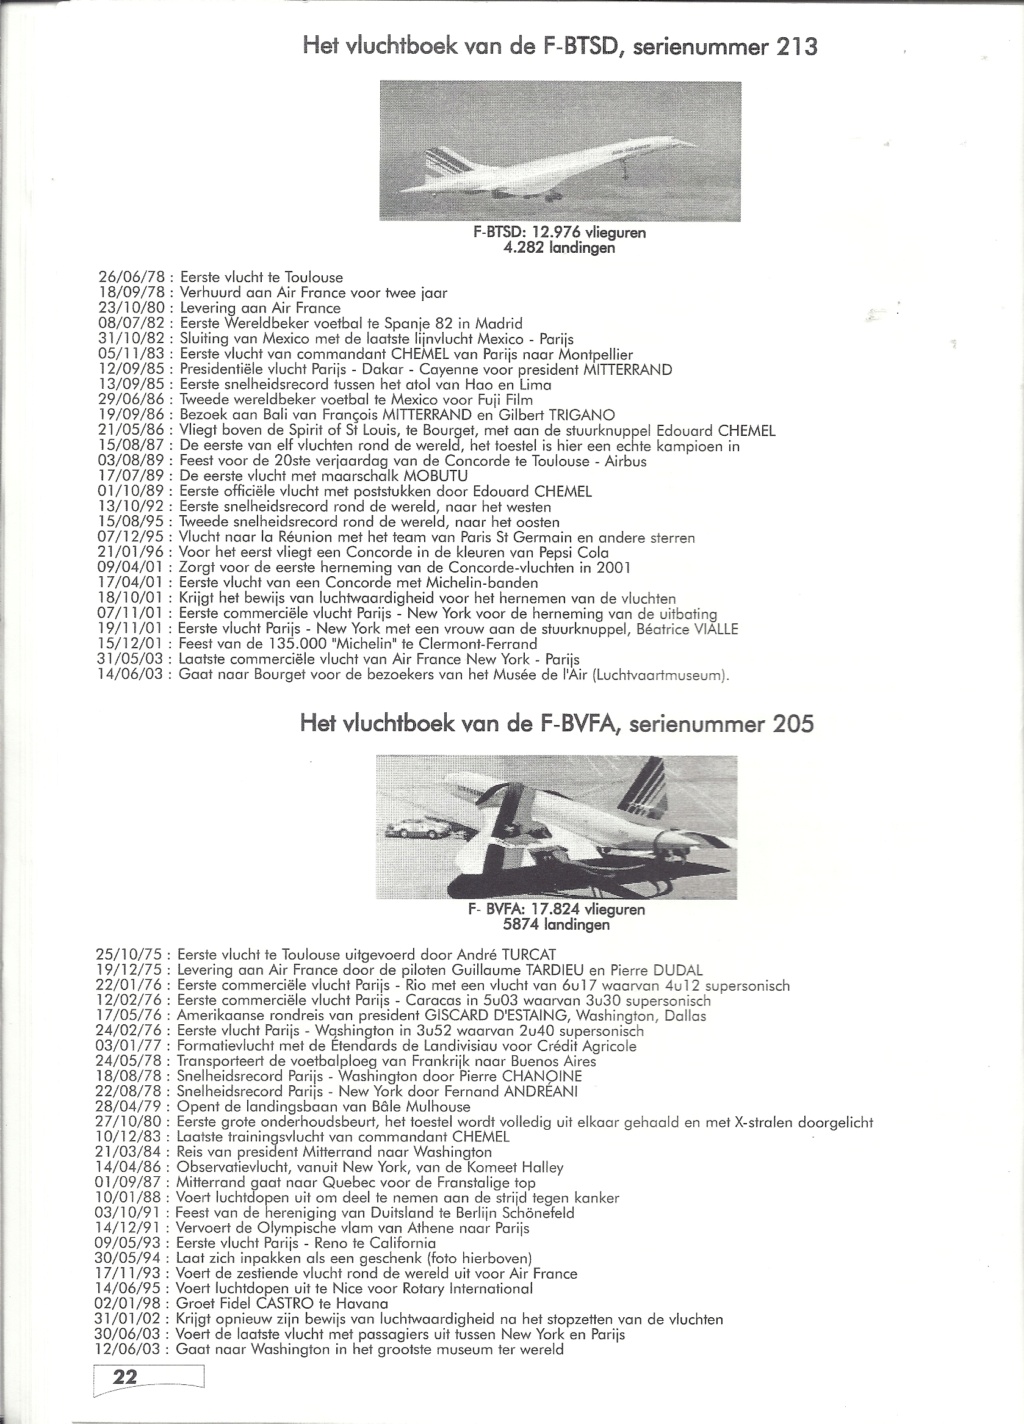 SUD AVIATION - BRITISH AIRCRAFT CORPORATION  CONCORDE 1/72ème Réf 52903 Notice Hell2272